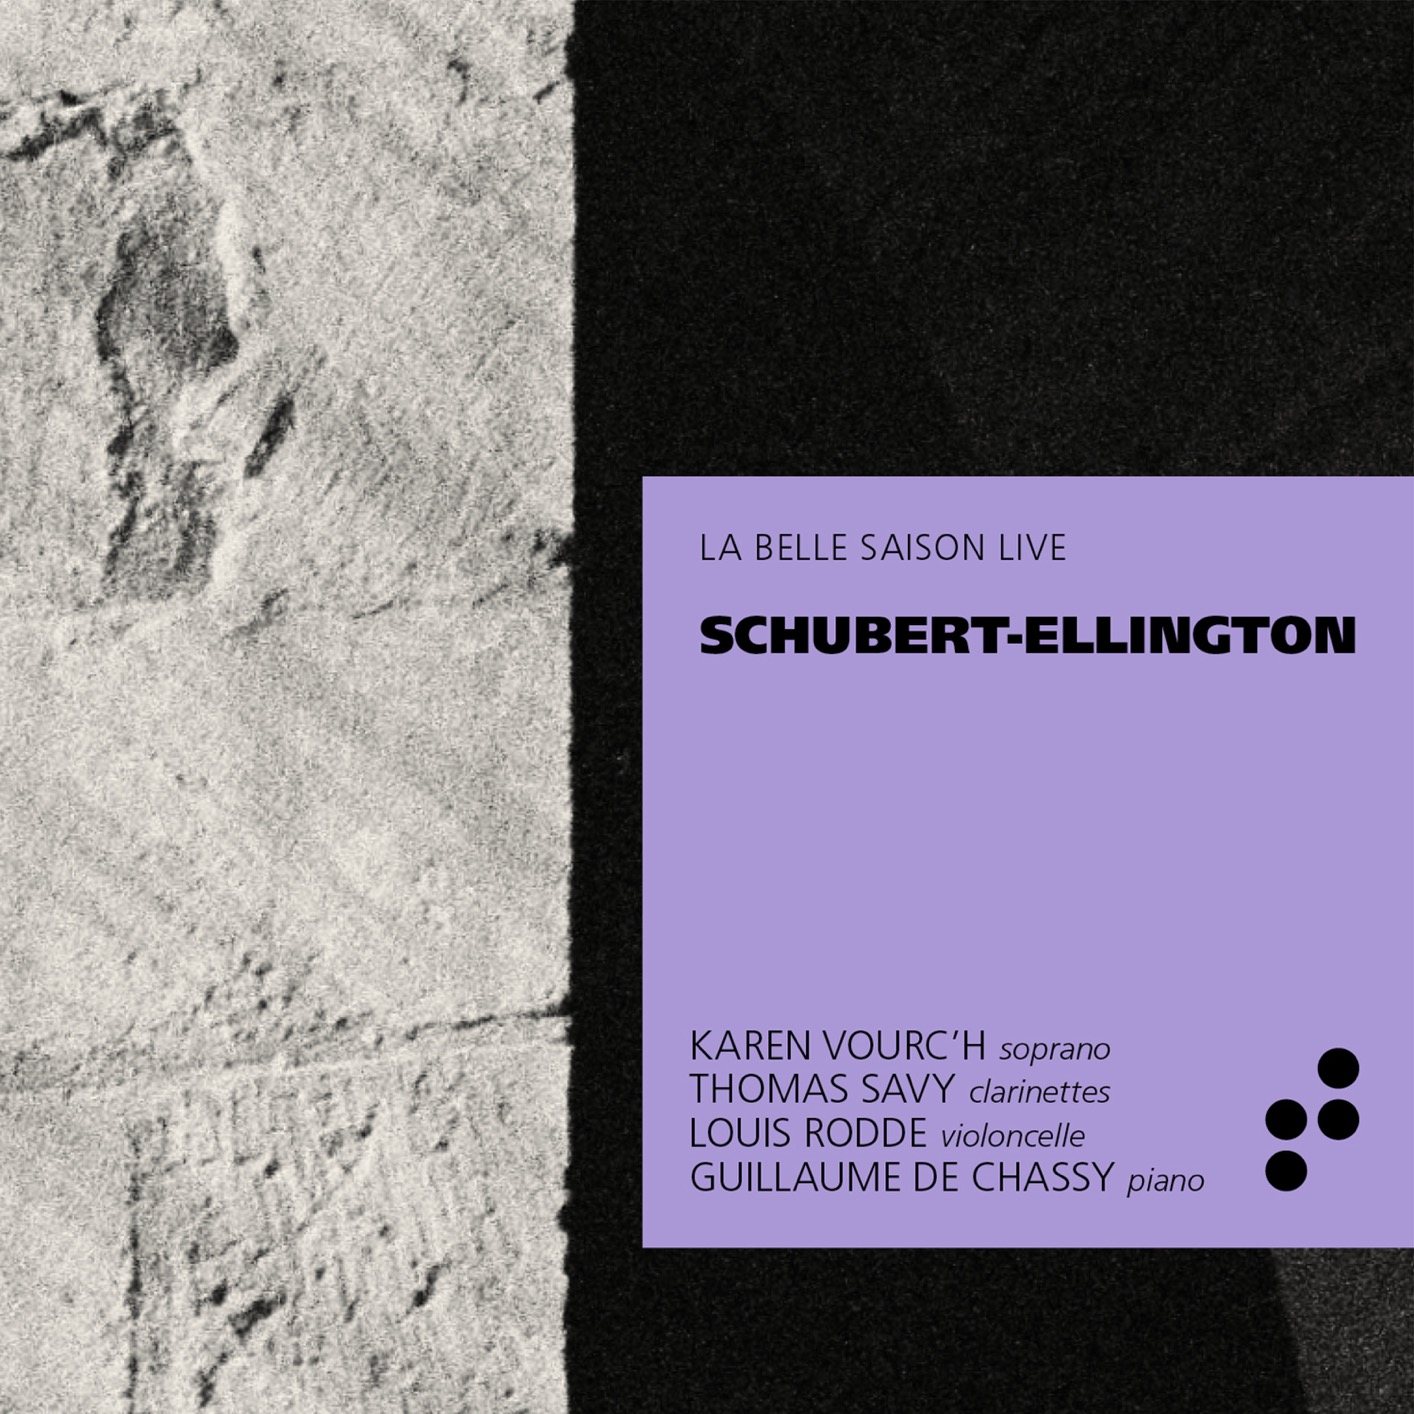 Thomas Savy, Louis Rodde, Guillaume de Chassy, Karen Vourc’h – Schubert-Ellington (2019) [FLAC 24bit/88,2kHz]